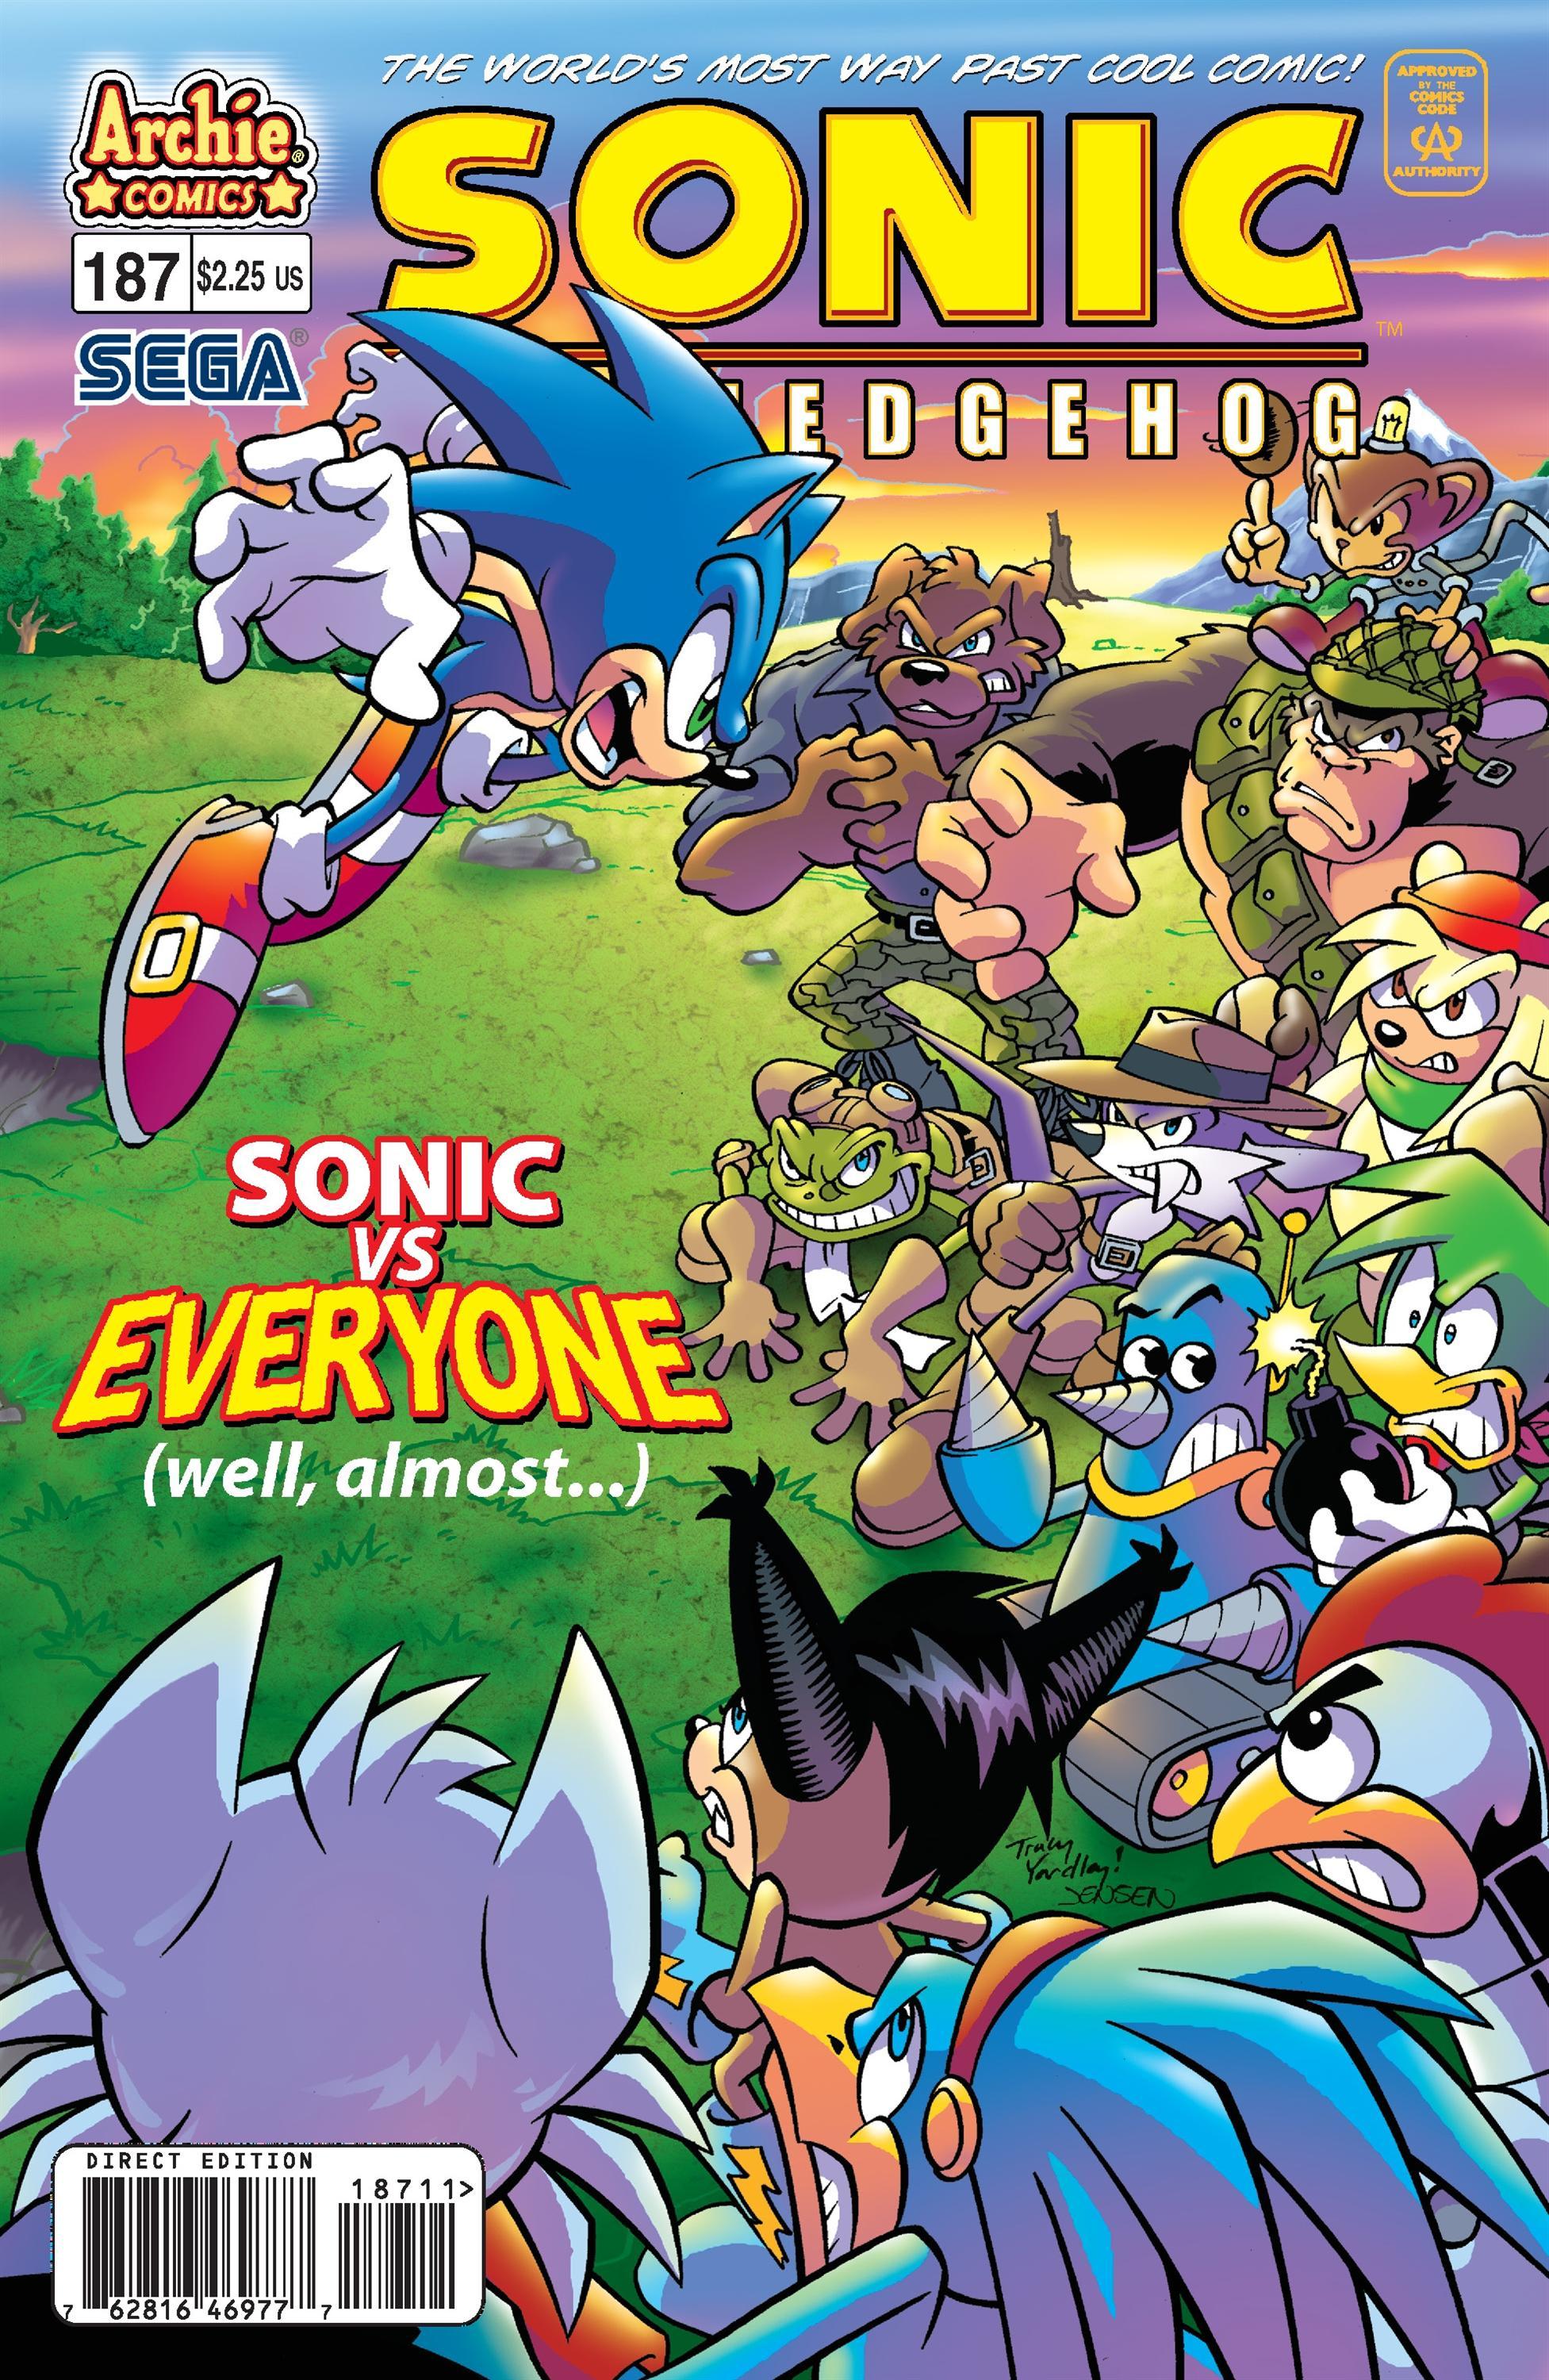 Archie Sonic the Hedgehog Issue 187 | Mobius Encyclopaedia | FANDOM